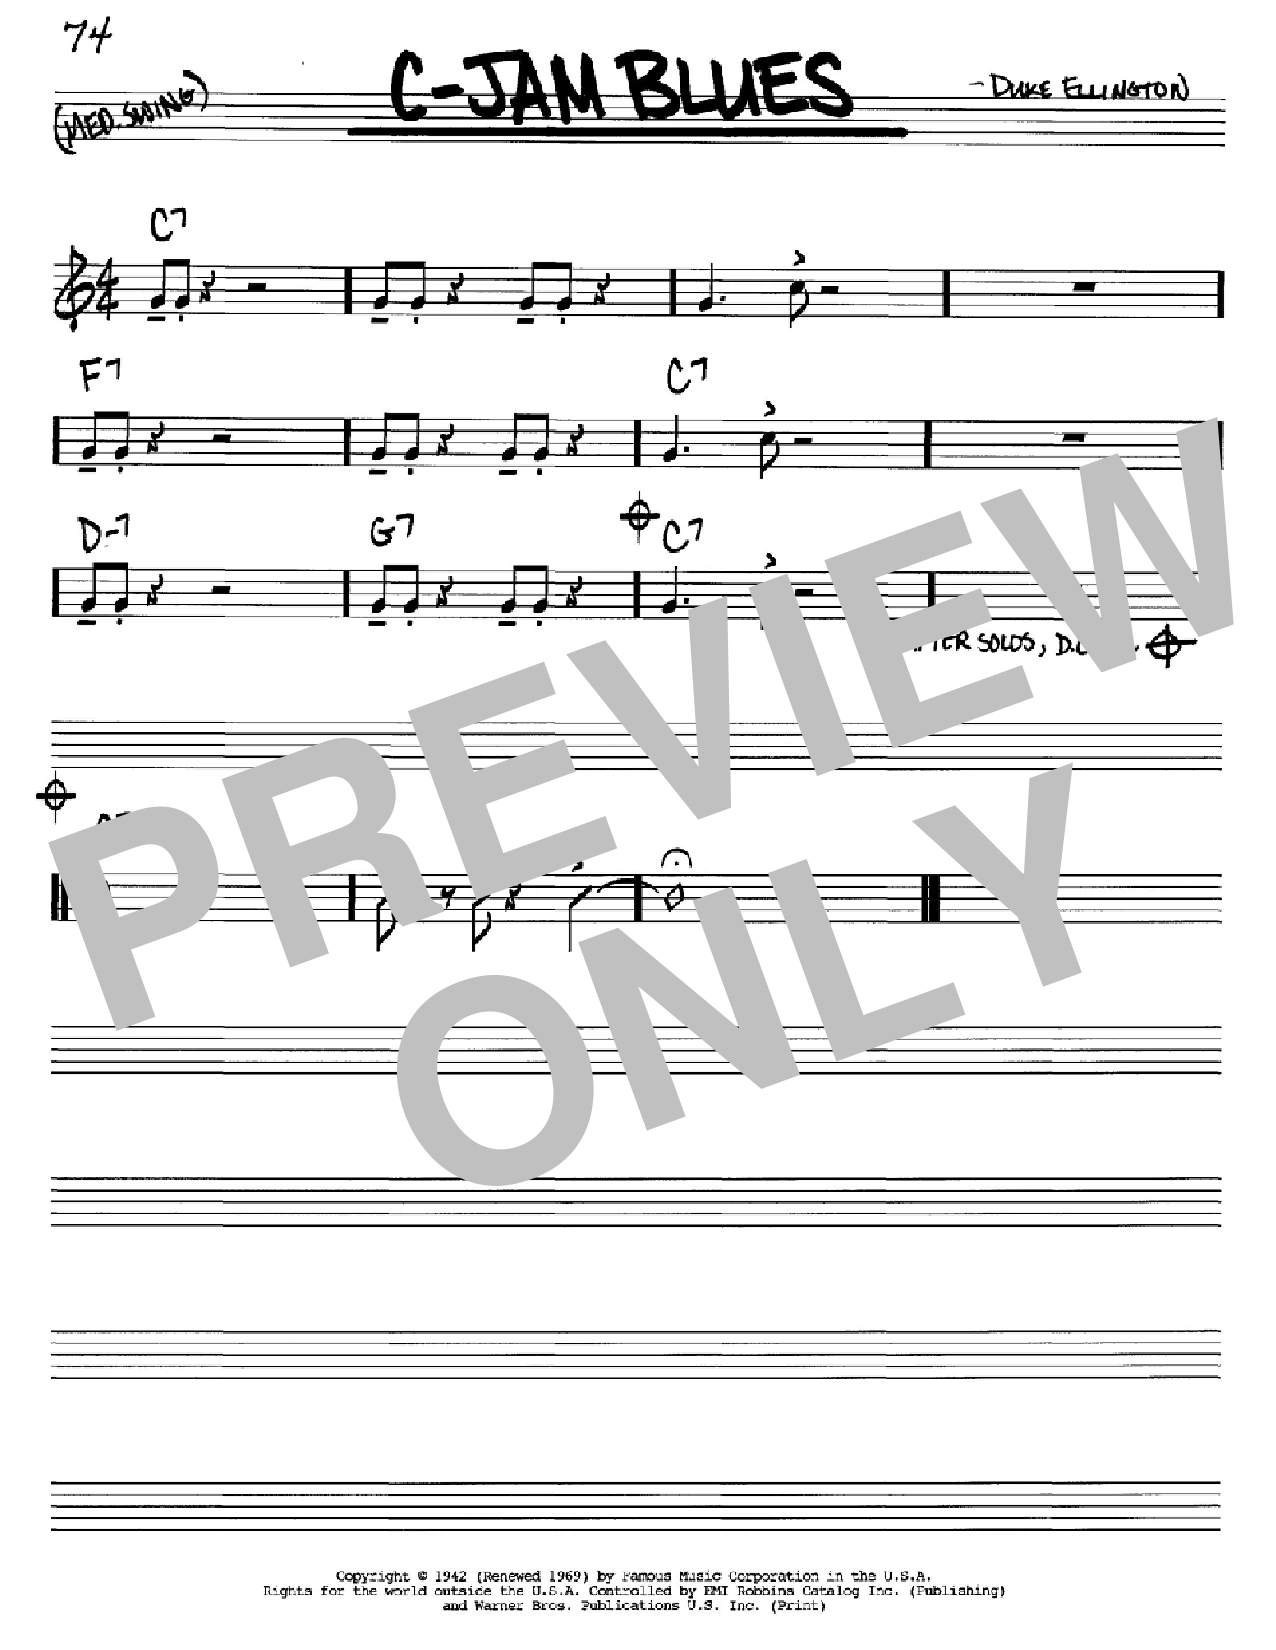 Duke Ellington C-Jam Blues Sheet Music Notes & Chords for Piano - Download or Print PDF